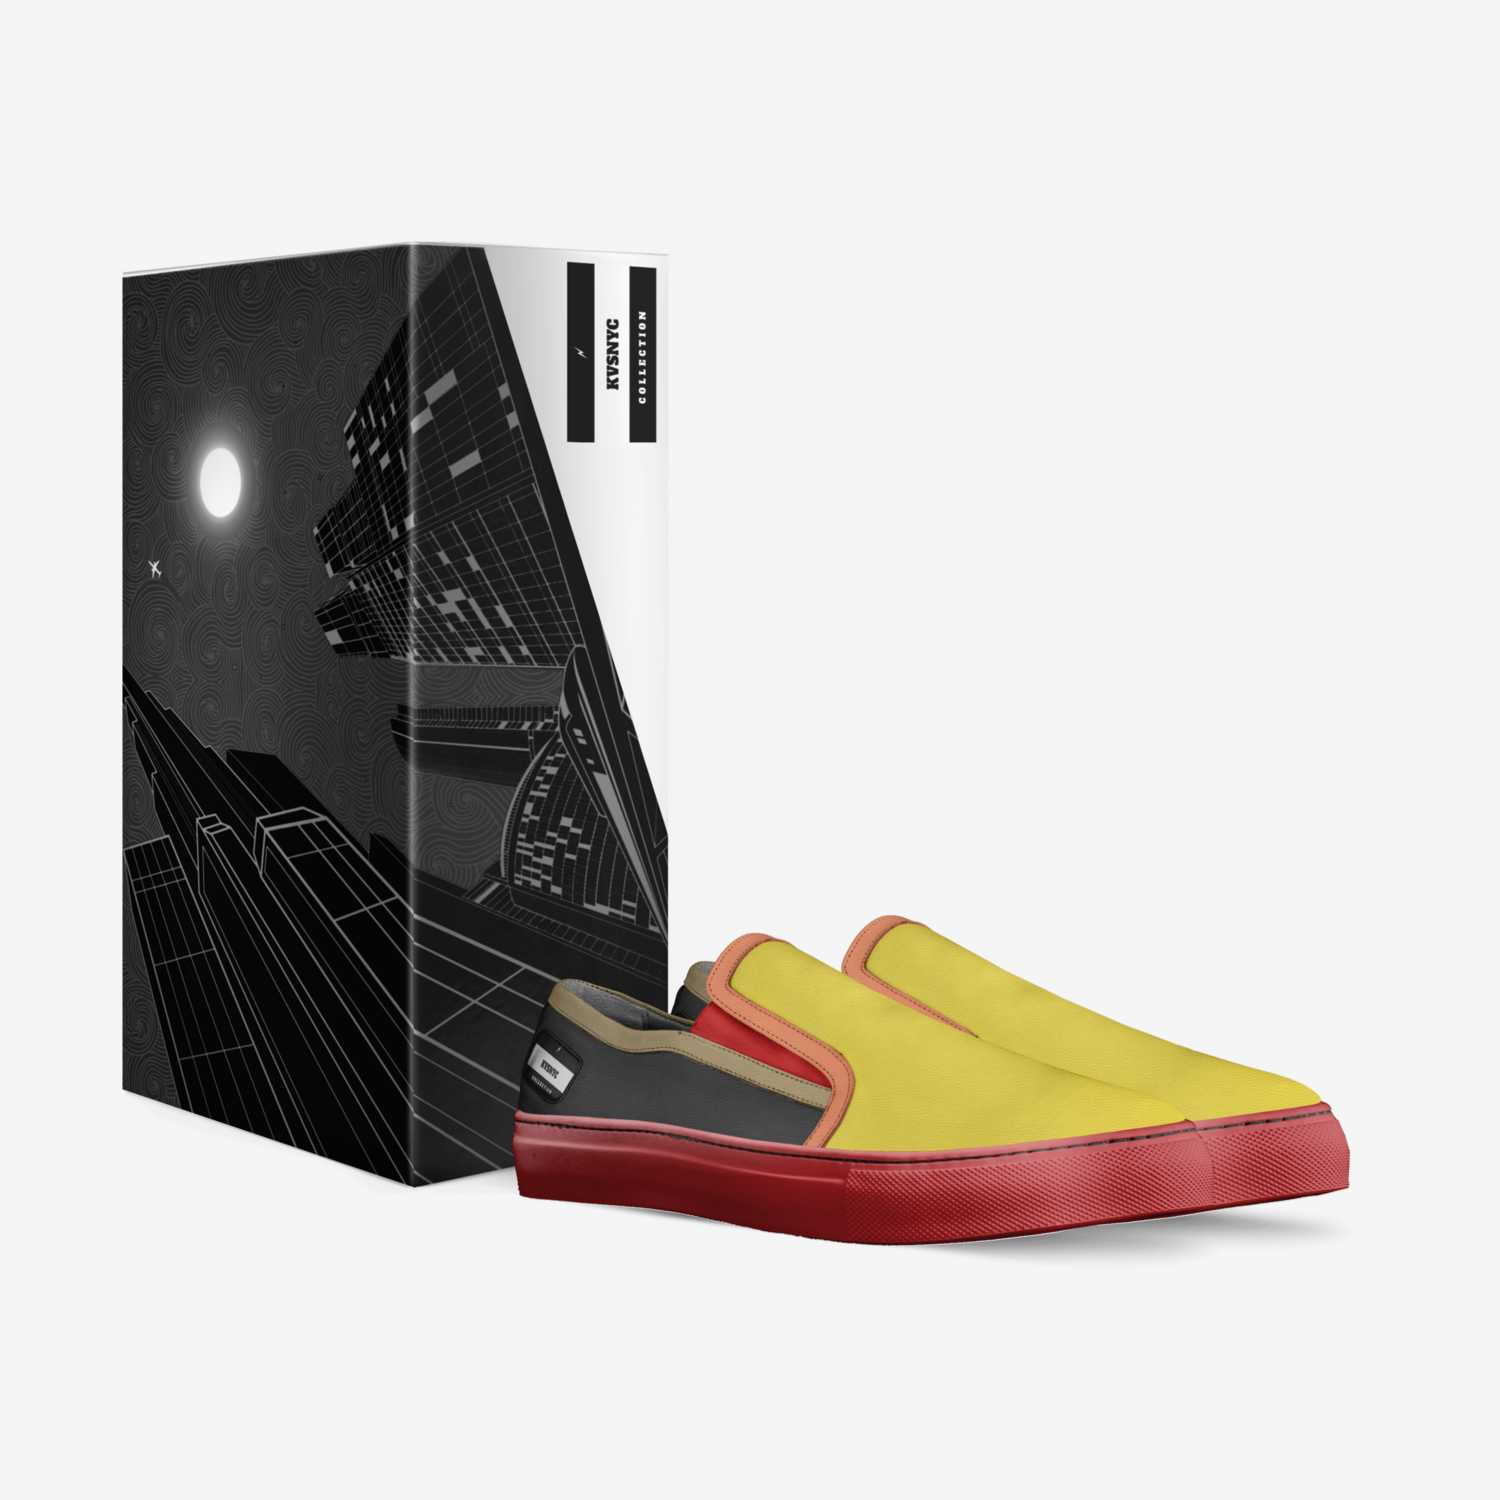 KVSNYC custom made in Italy shoes by Kimbert Sylvester | Box view